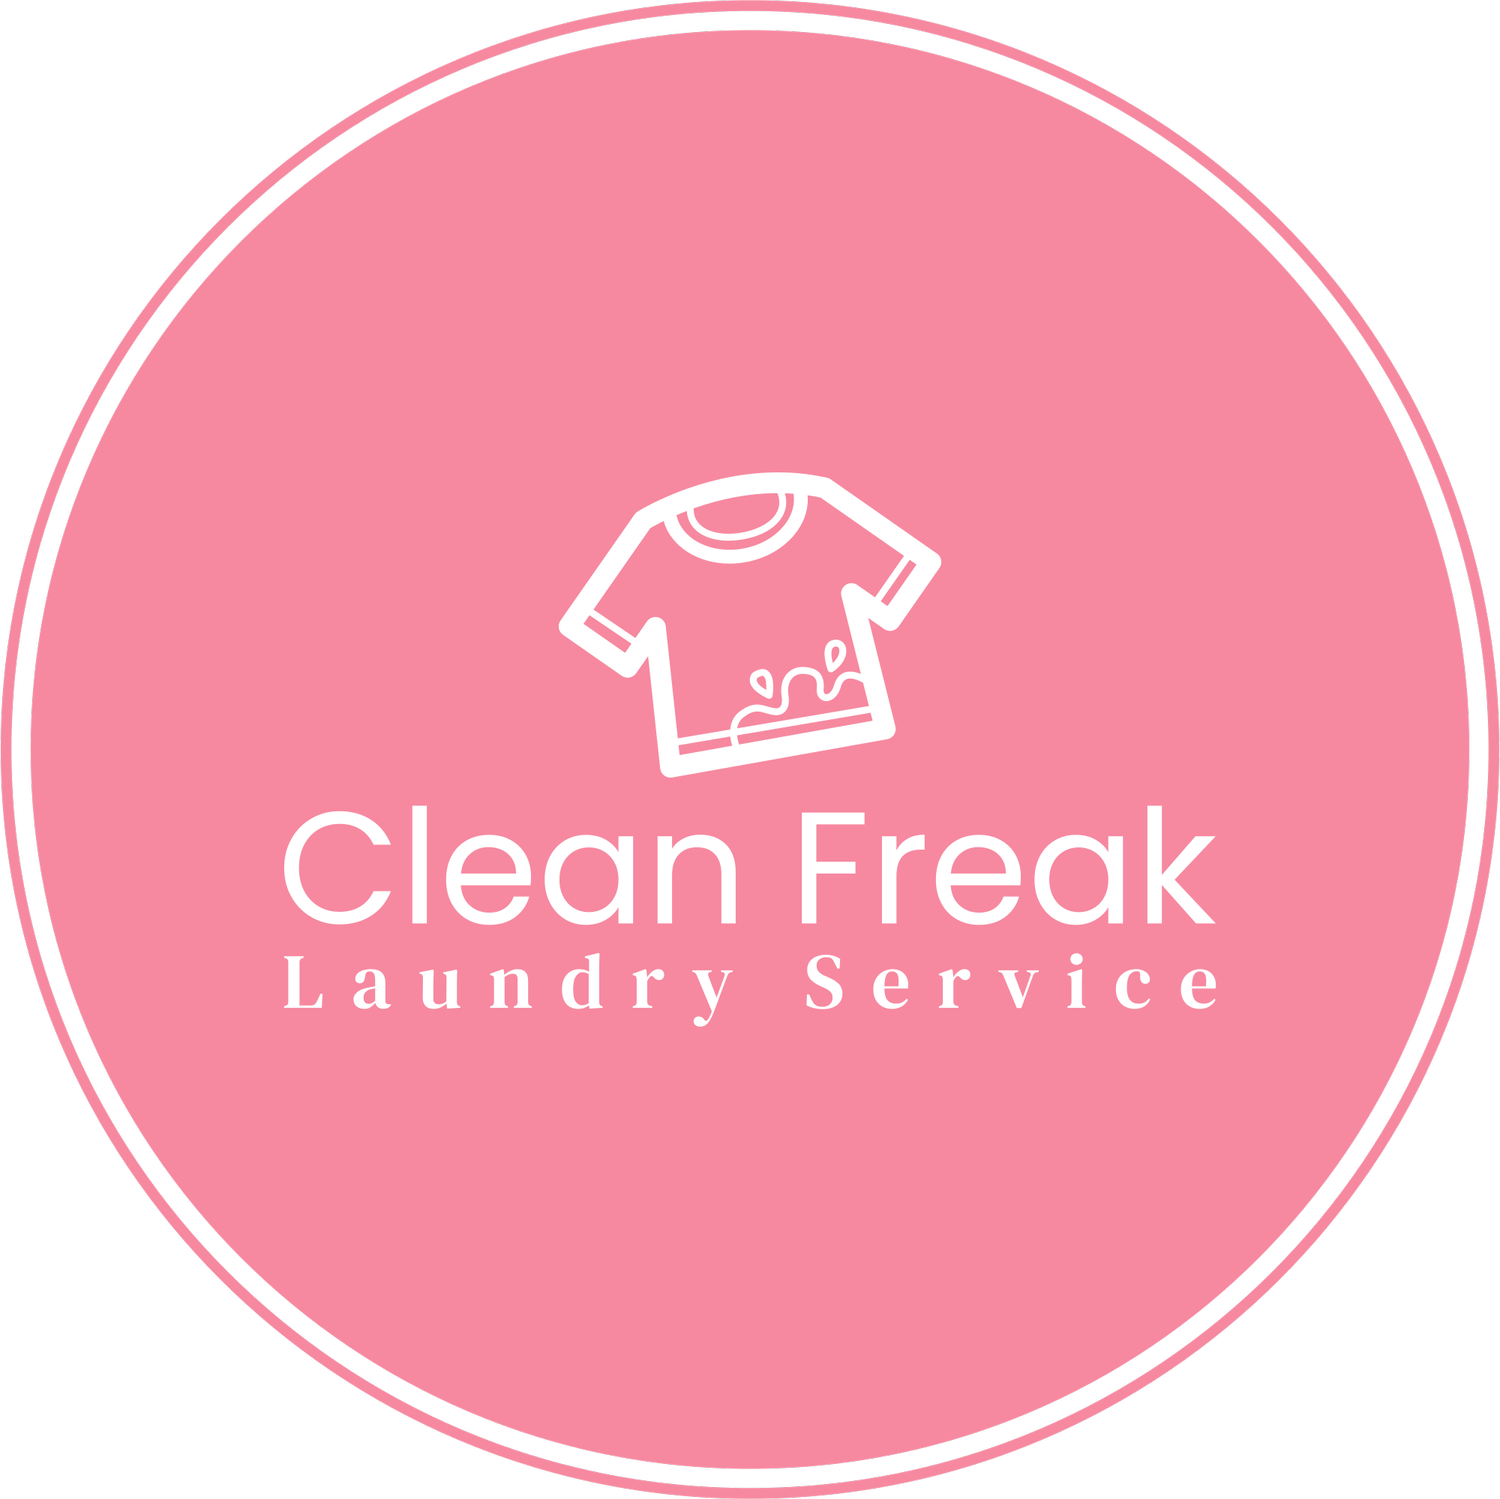 Clean Freak Laundry Service